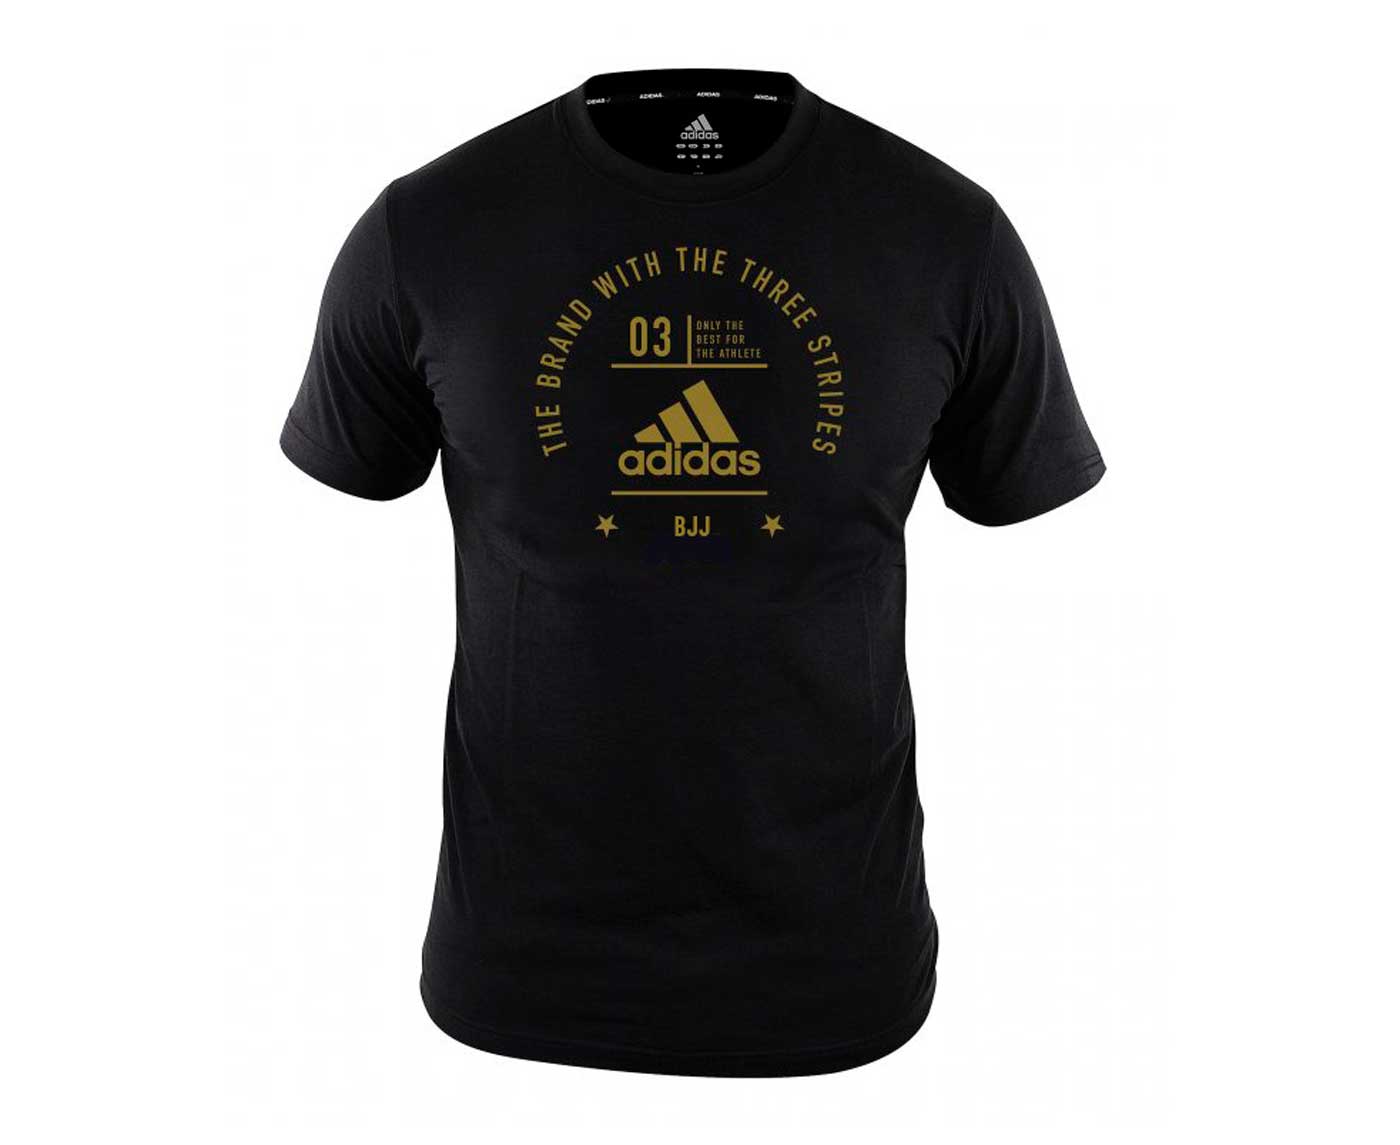 Футболка The Brand With The Three Stripes T-Shirt BJJ черно-золотая (размер S)